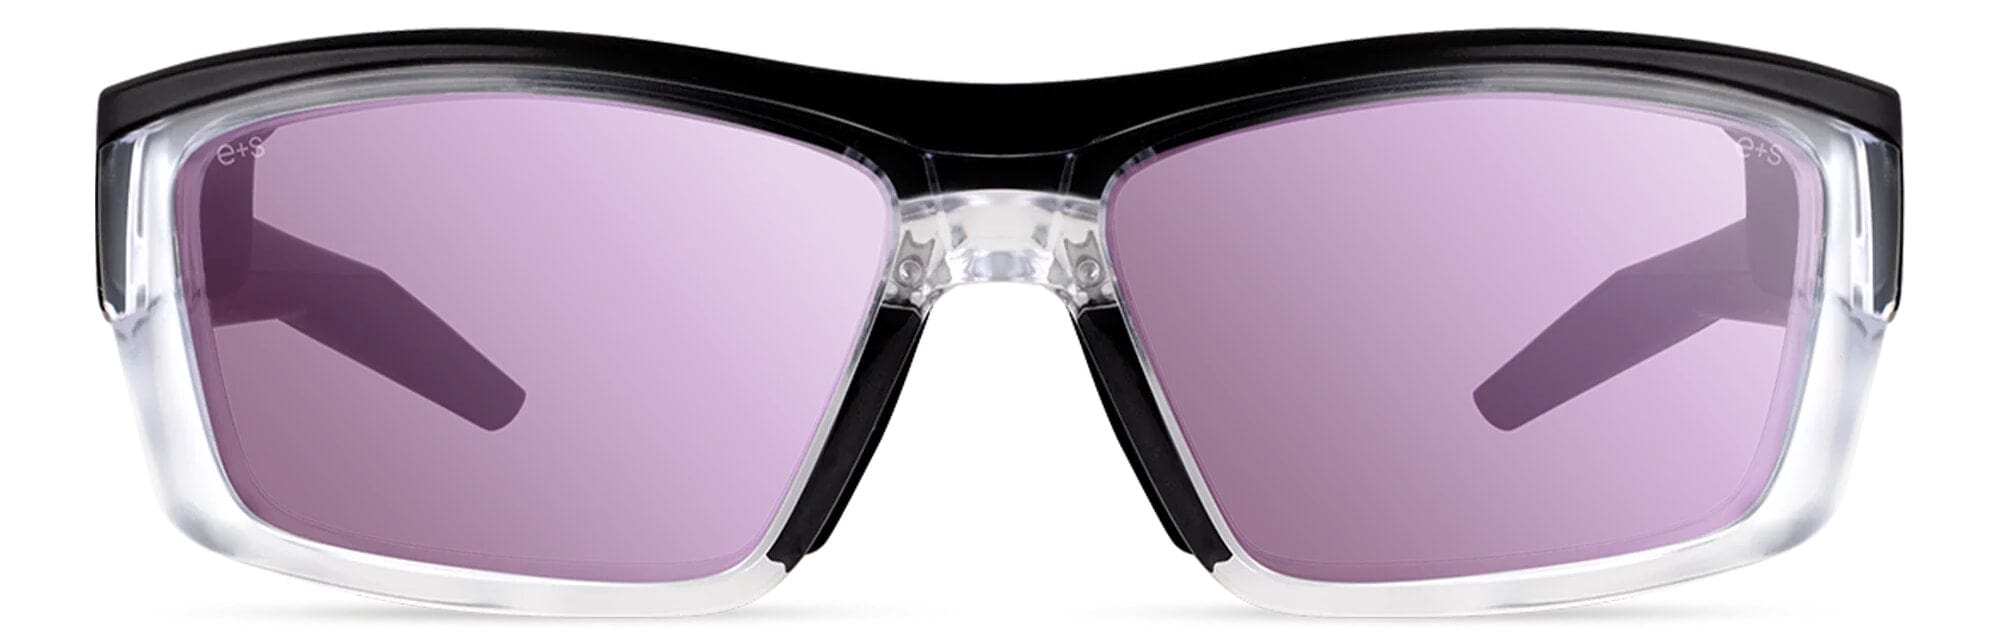 EnChroma Martinez Color Blind Safety Glasses with Indoor Universal Lens